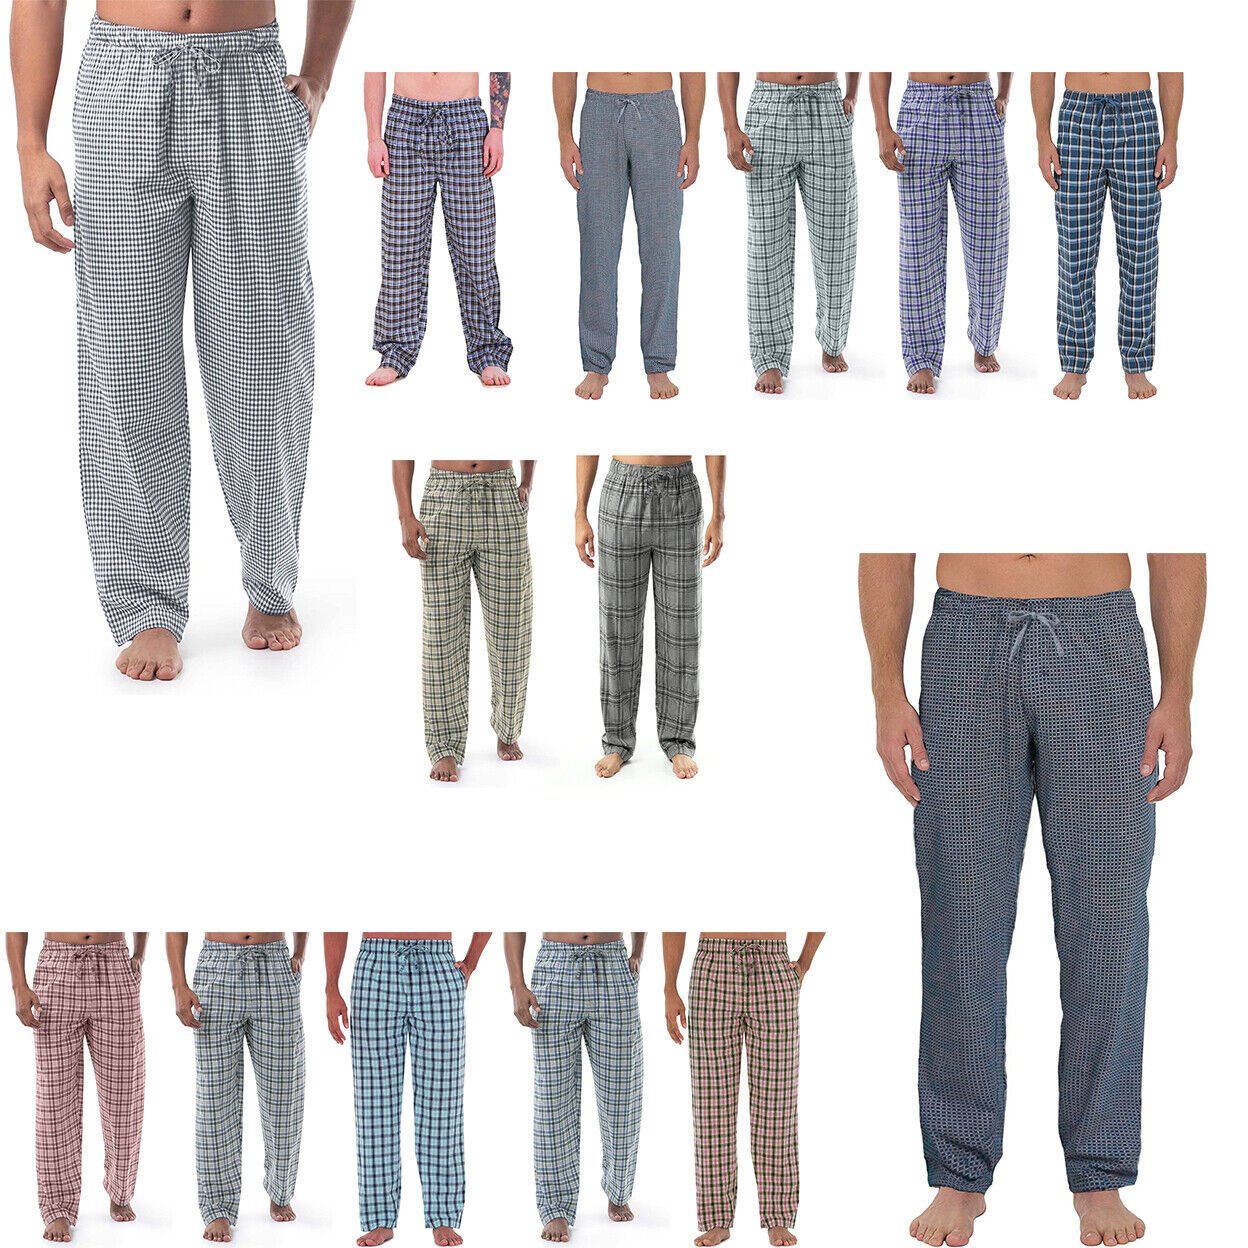 4-Pack: Men's Ultra-Soft Plaid Cotton Jersey Knit Comfy Sleep Lounge Pajama Pants - Large